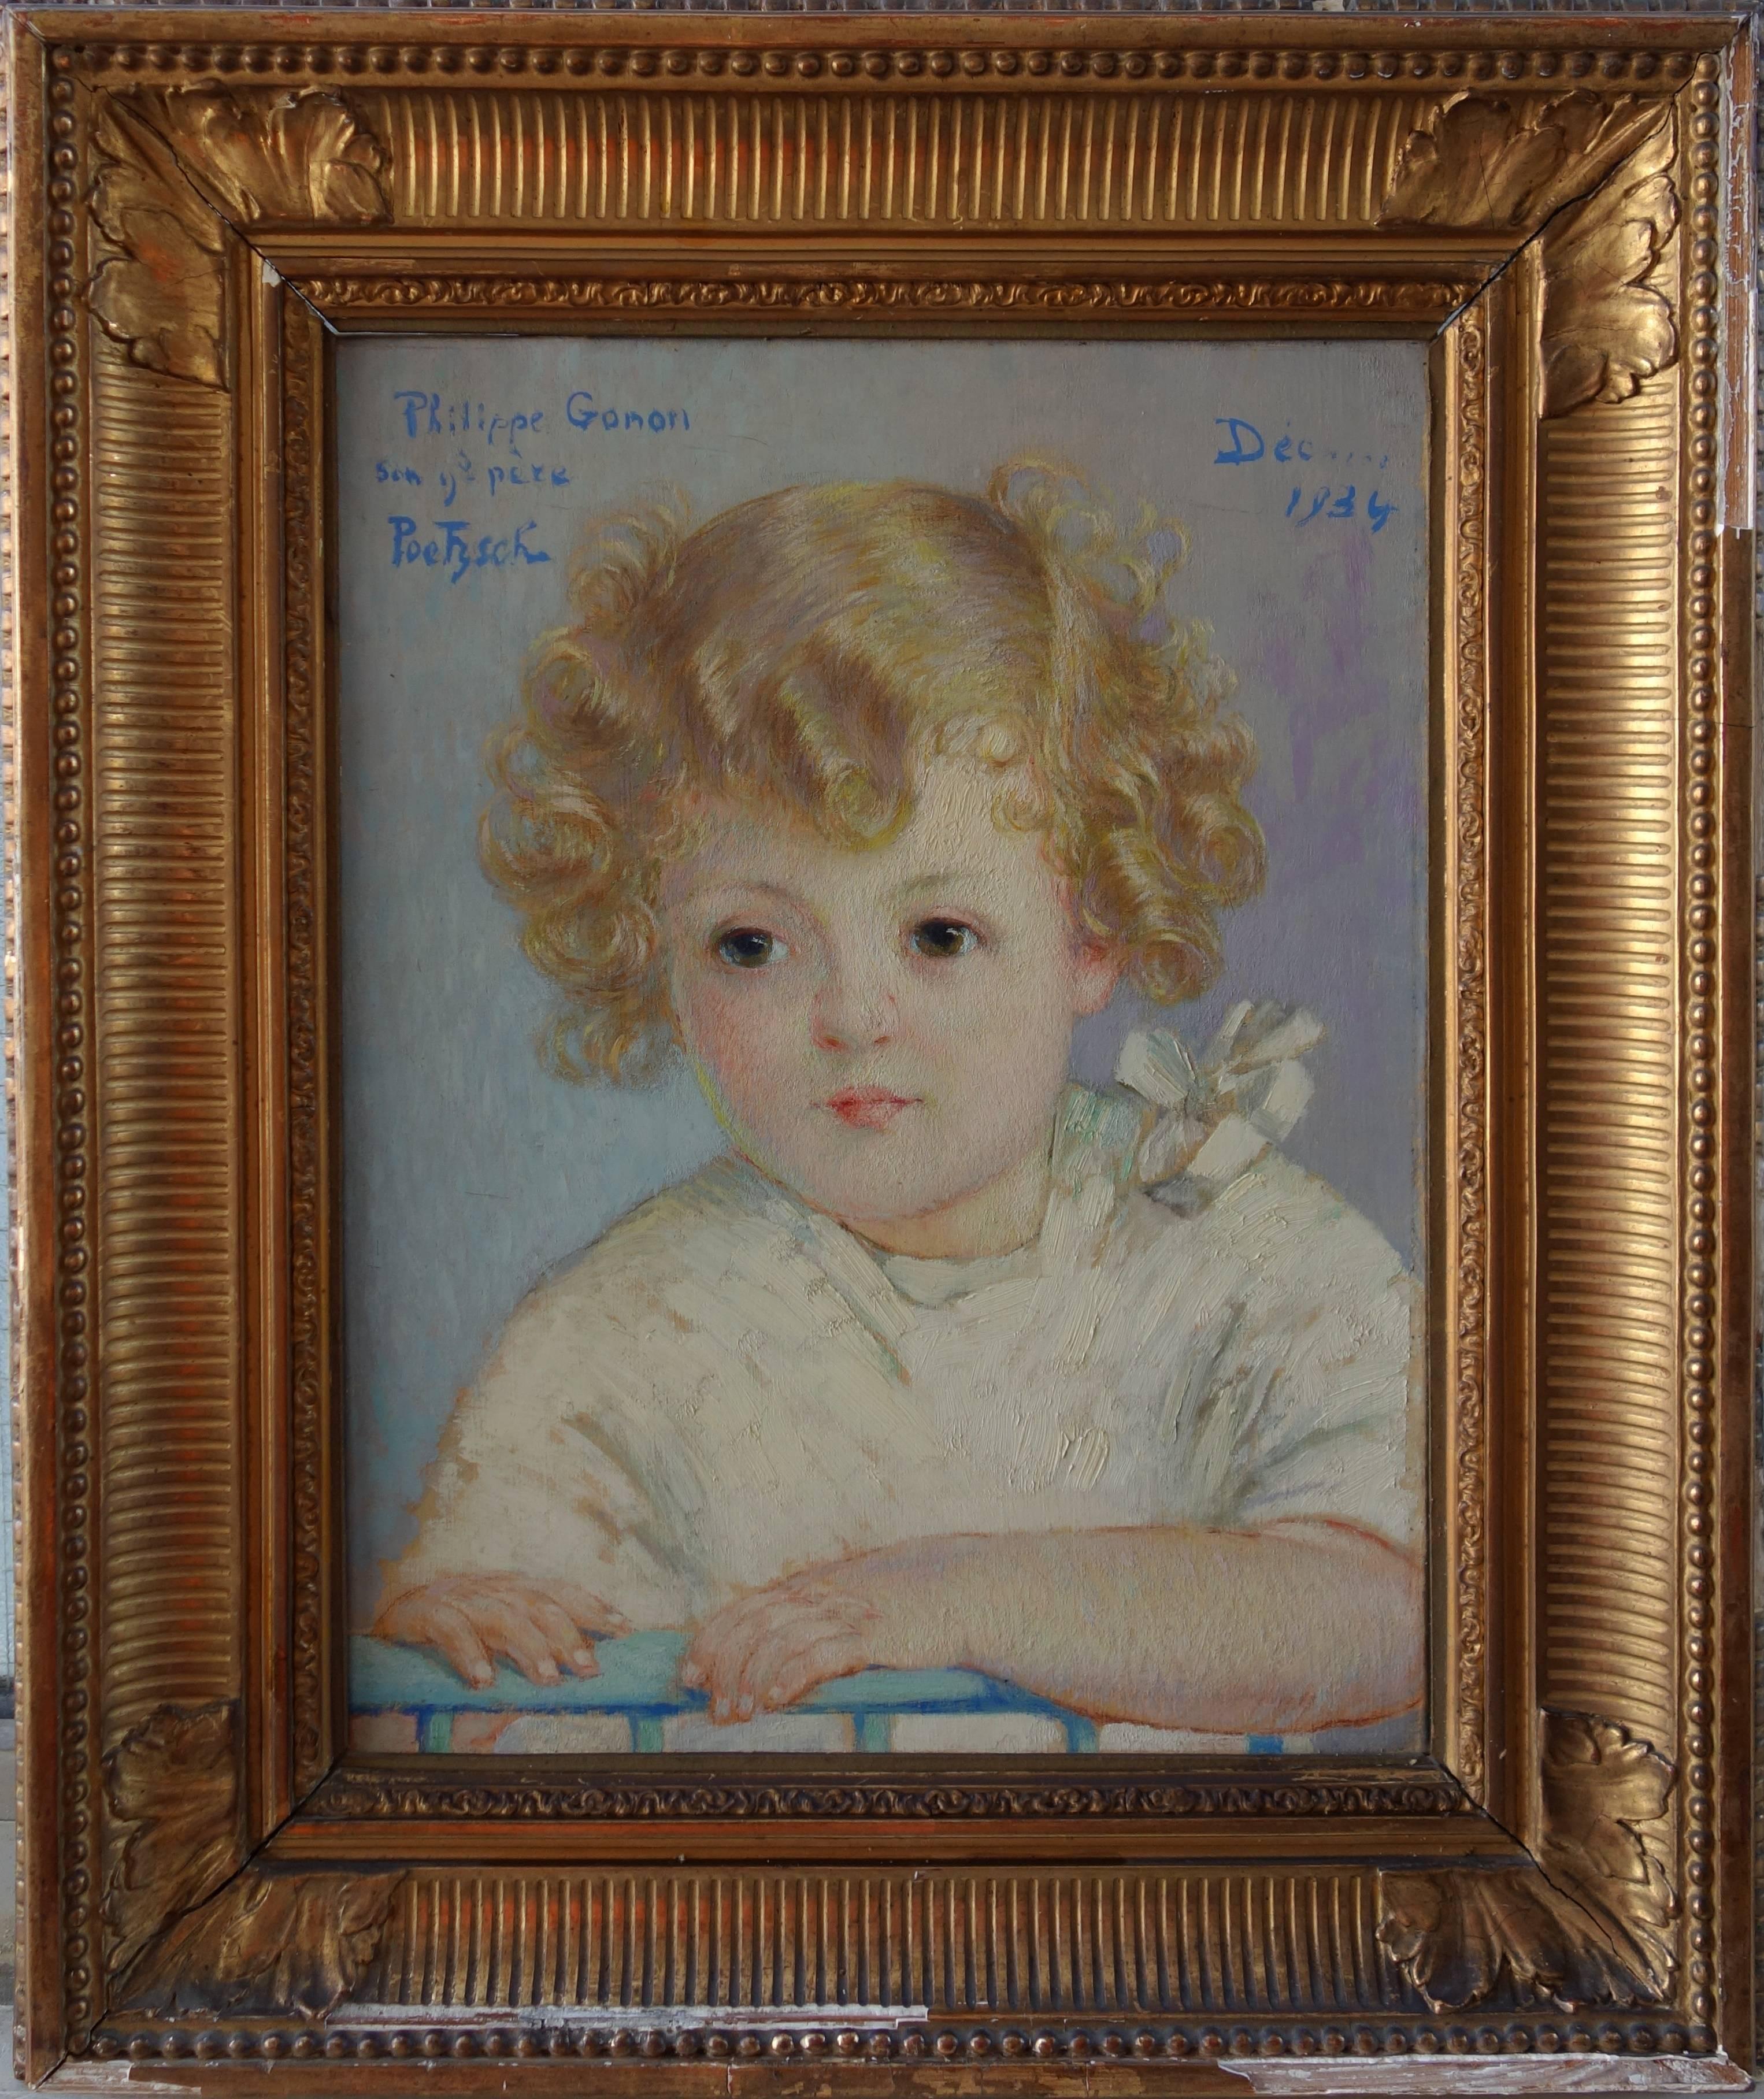 Gustave Poetzsch Portrait Painting - Blond Hair Boy - Original signed oil on canvas - 1934